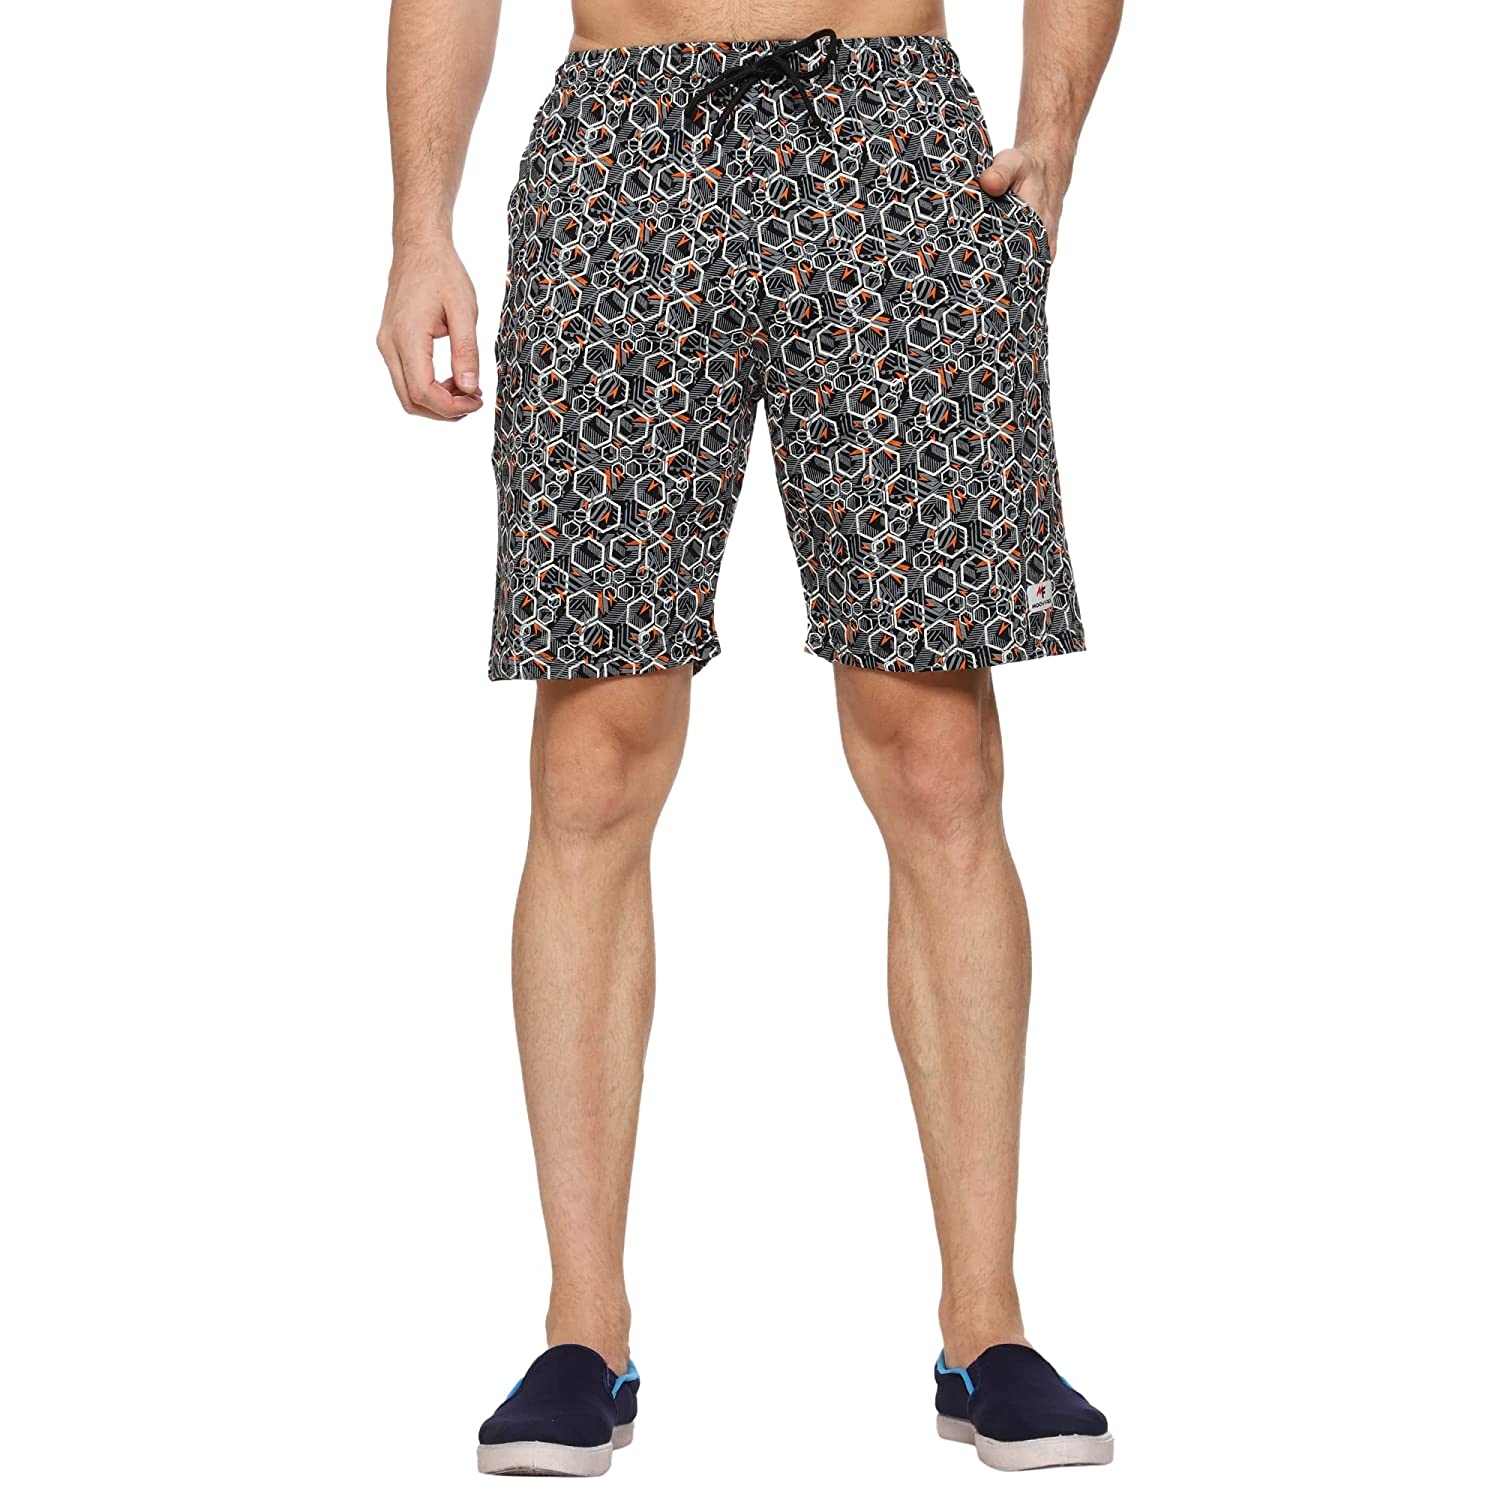 Moovfree Mens Cotton Bermuda Printed Casual Shorts Regular Fit Lounge Shorts with Zip Pockets, Hexa Brown